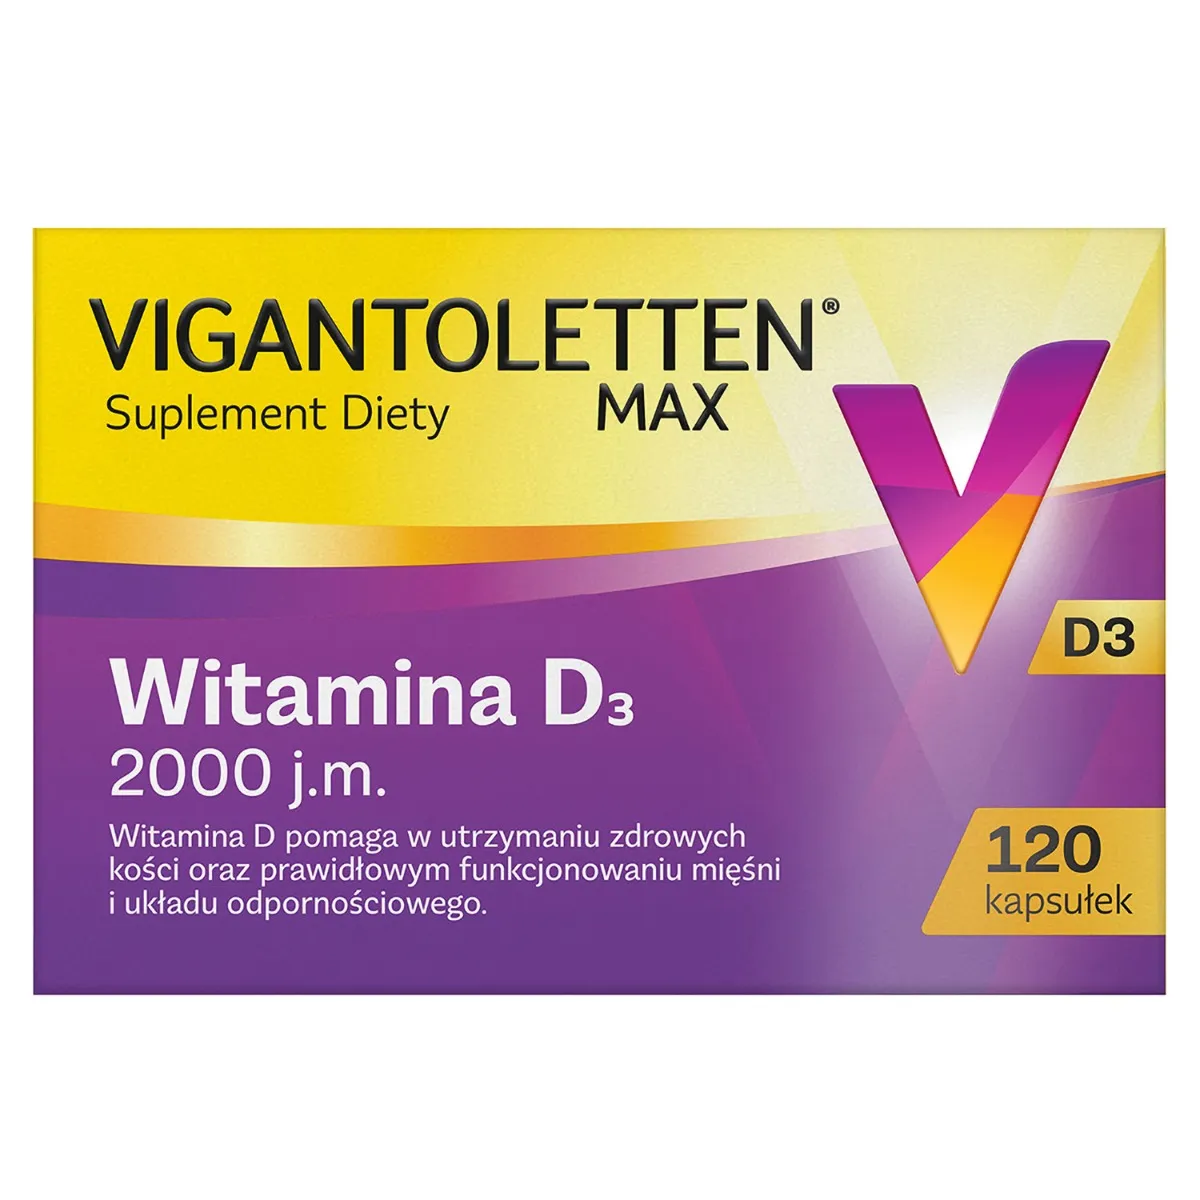 Vigantoletten Max, 2000 j.m., 120 tabletek